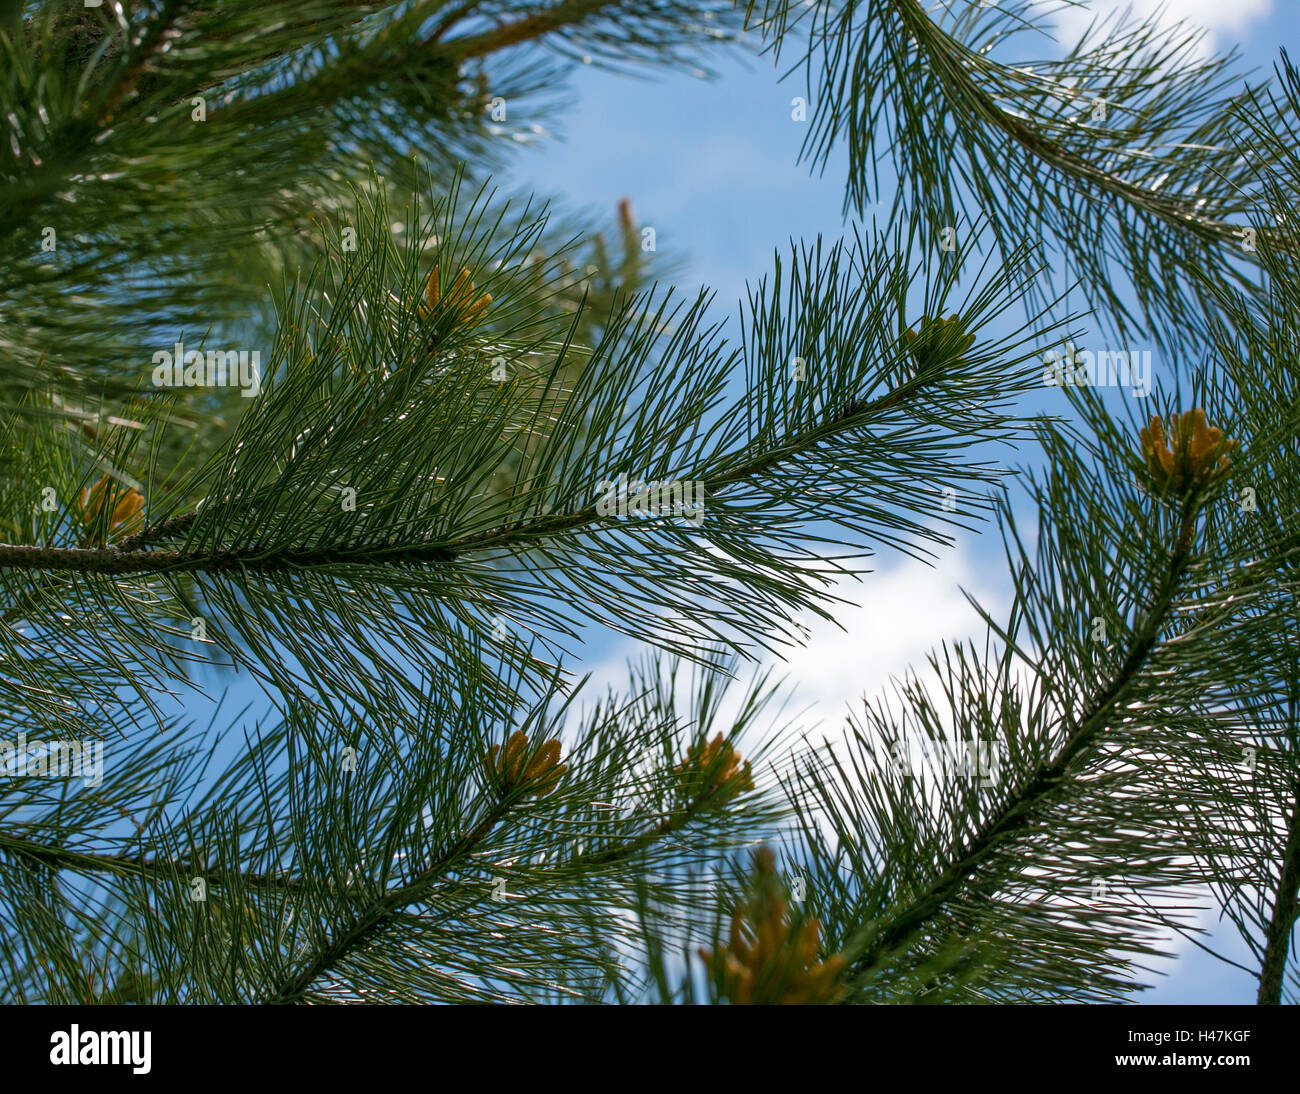 A Pine Needle Backdrop Stock Photo